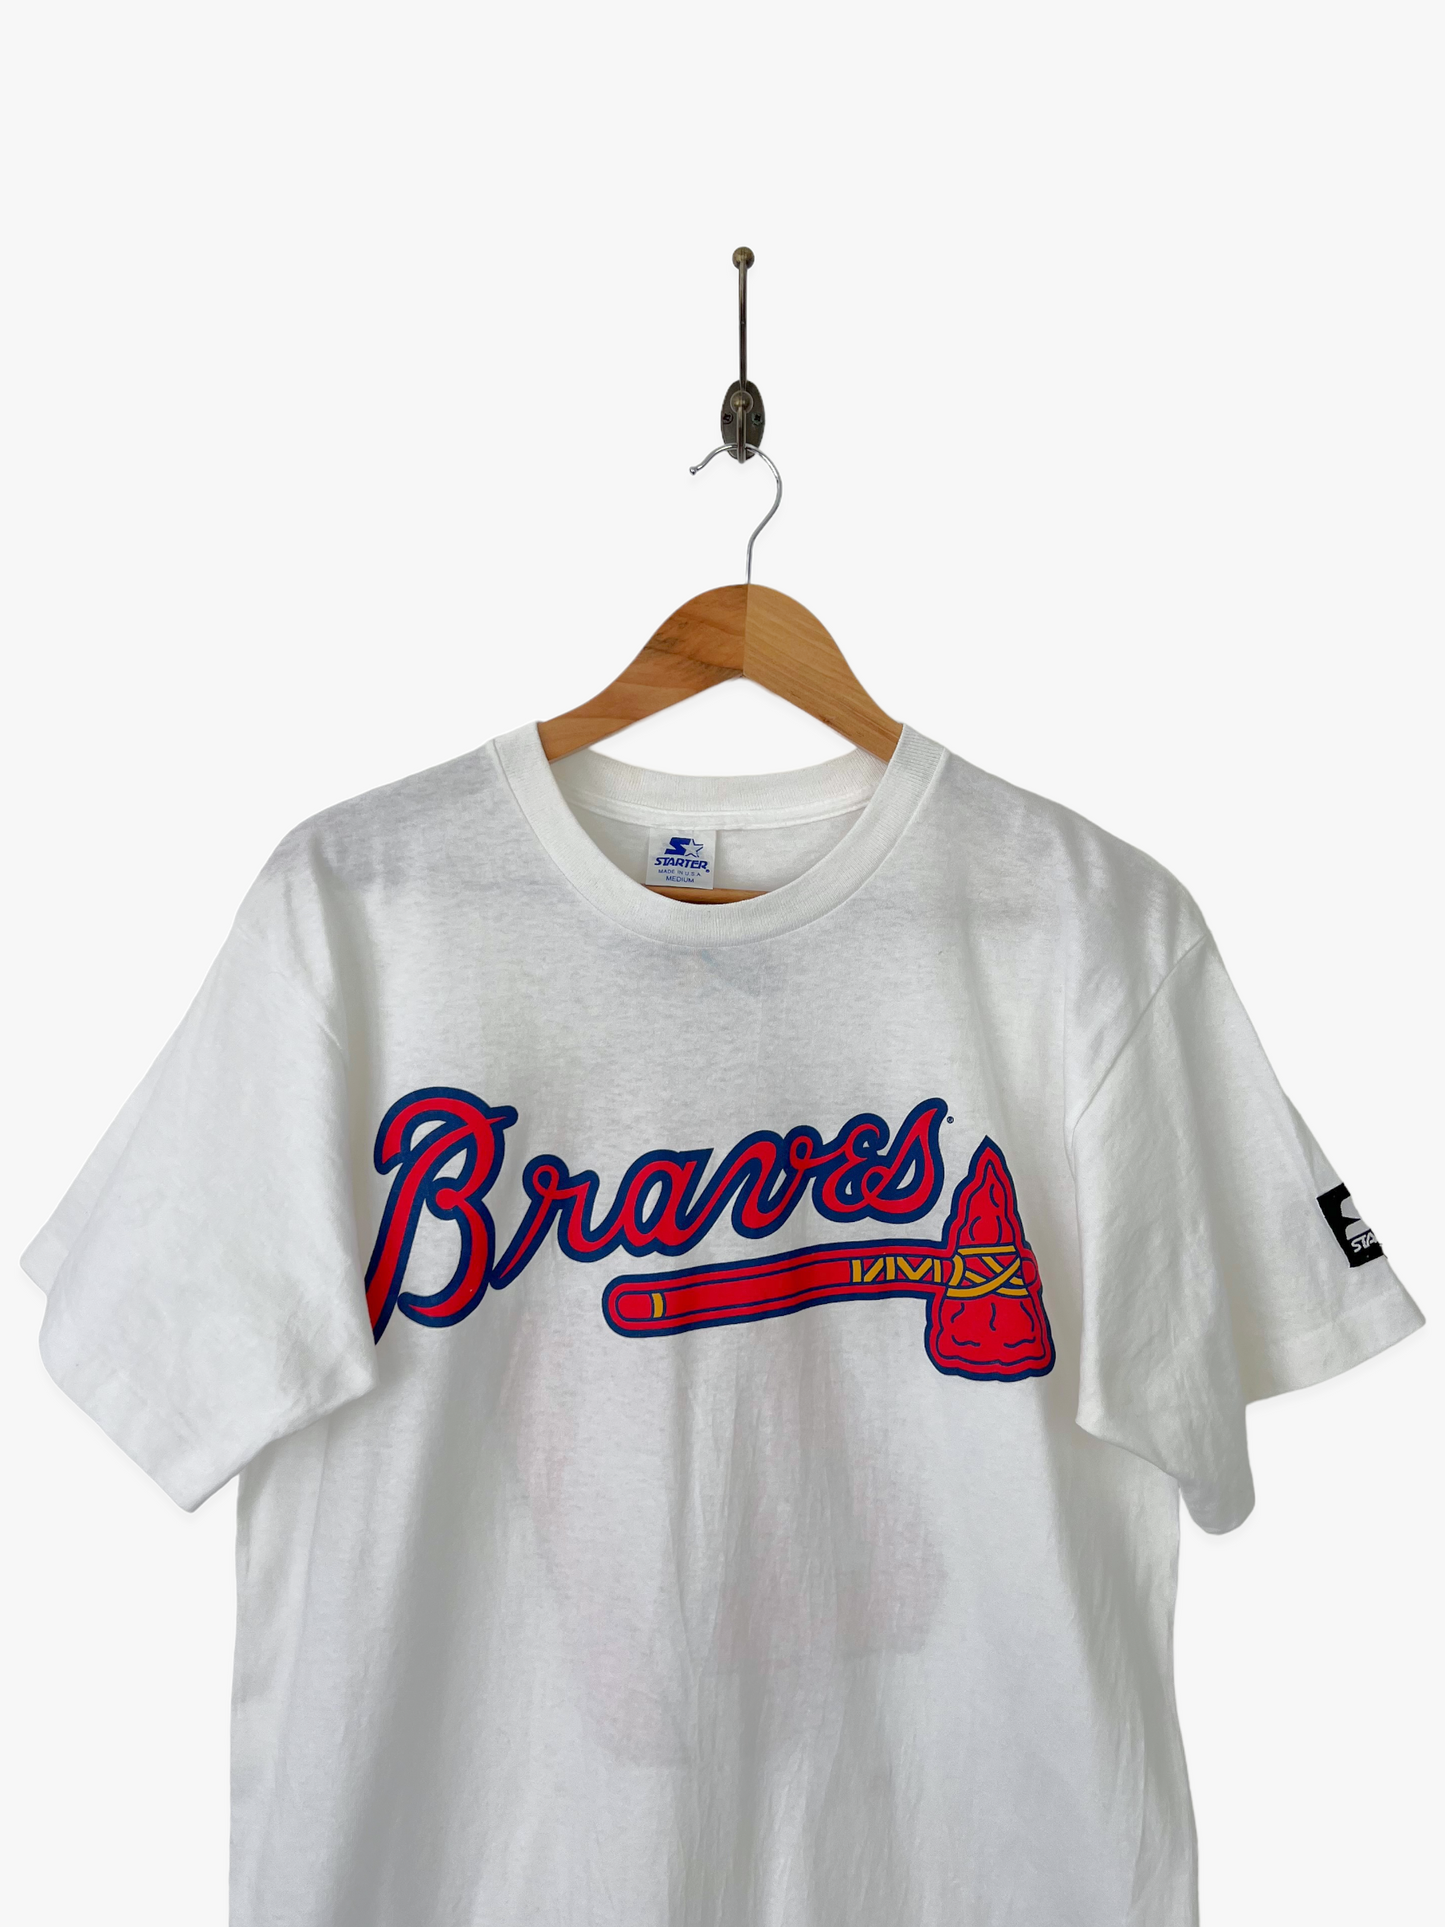 1996 Atlanta Braves MLB Starter USA Made Vintage T-Shirt Size 10-12